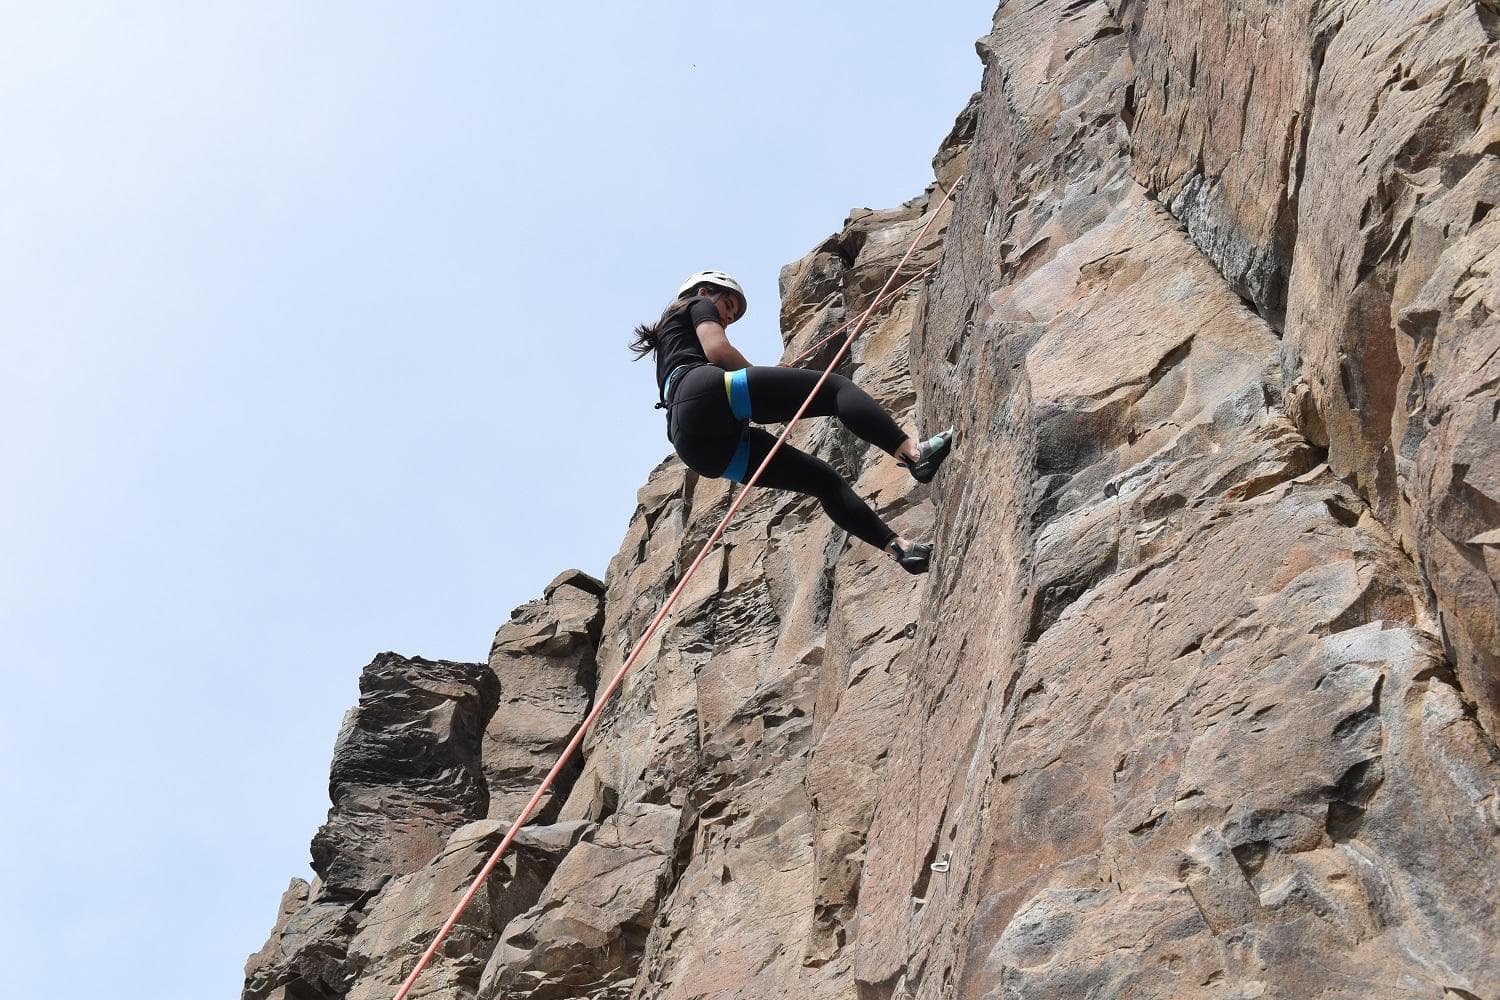 A climber being lowered down after a climb